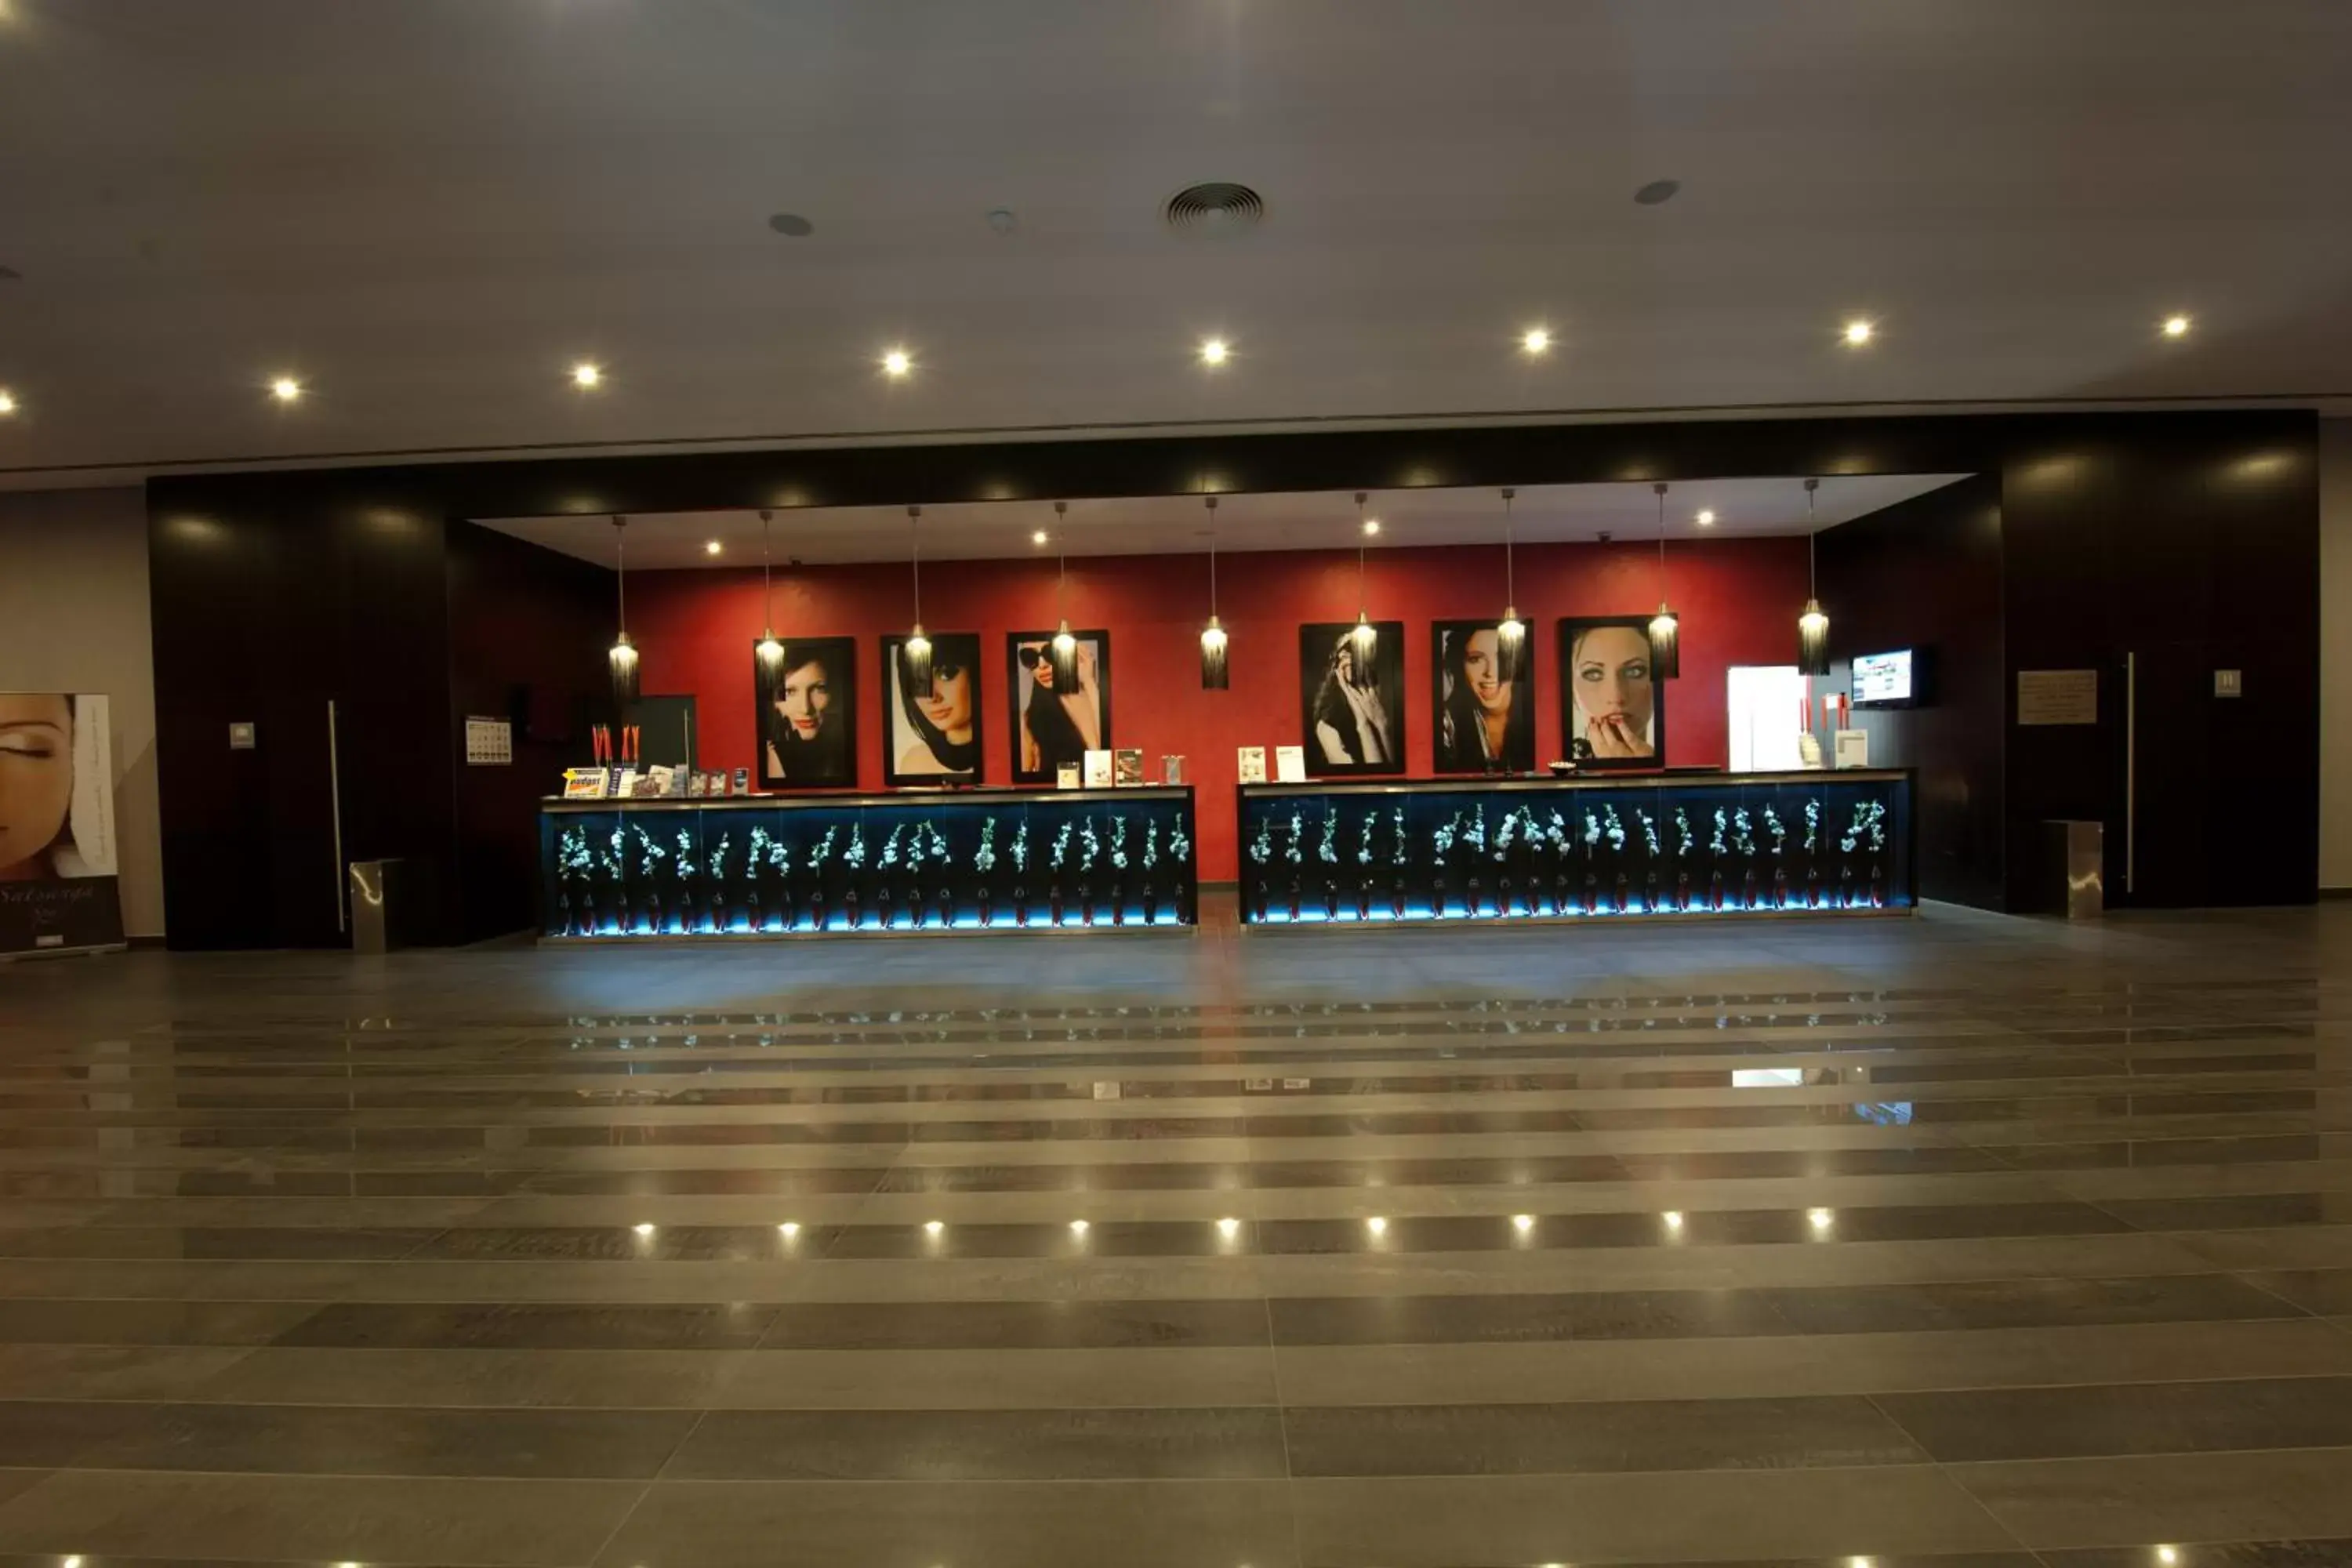 Lobby or reception in Vila Gale Lagos